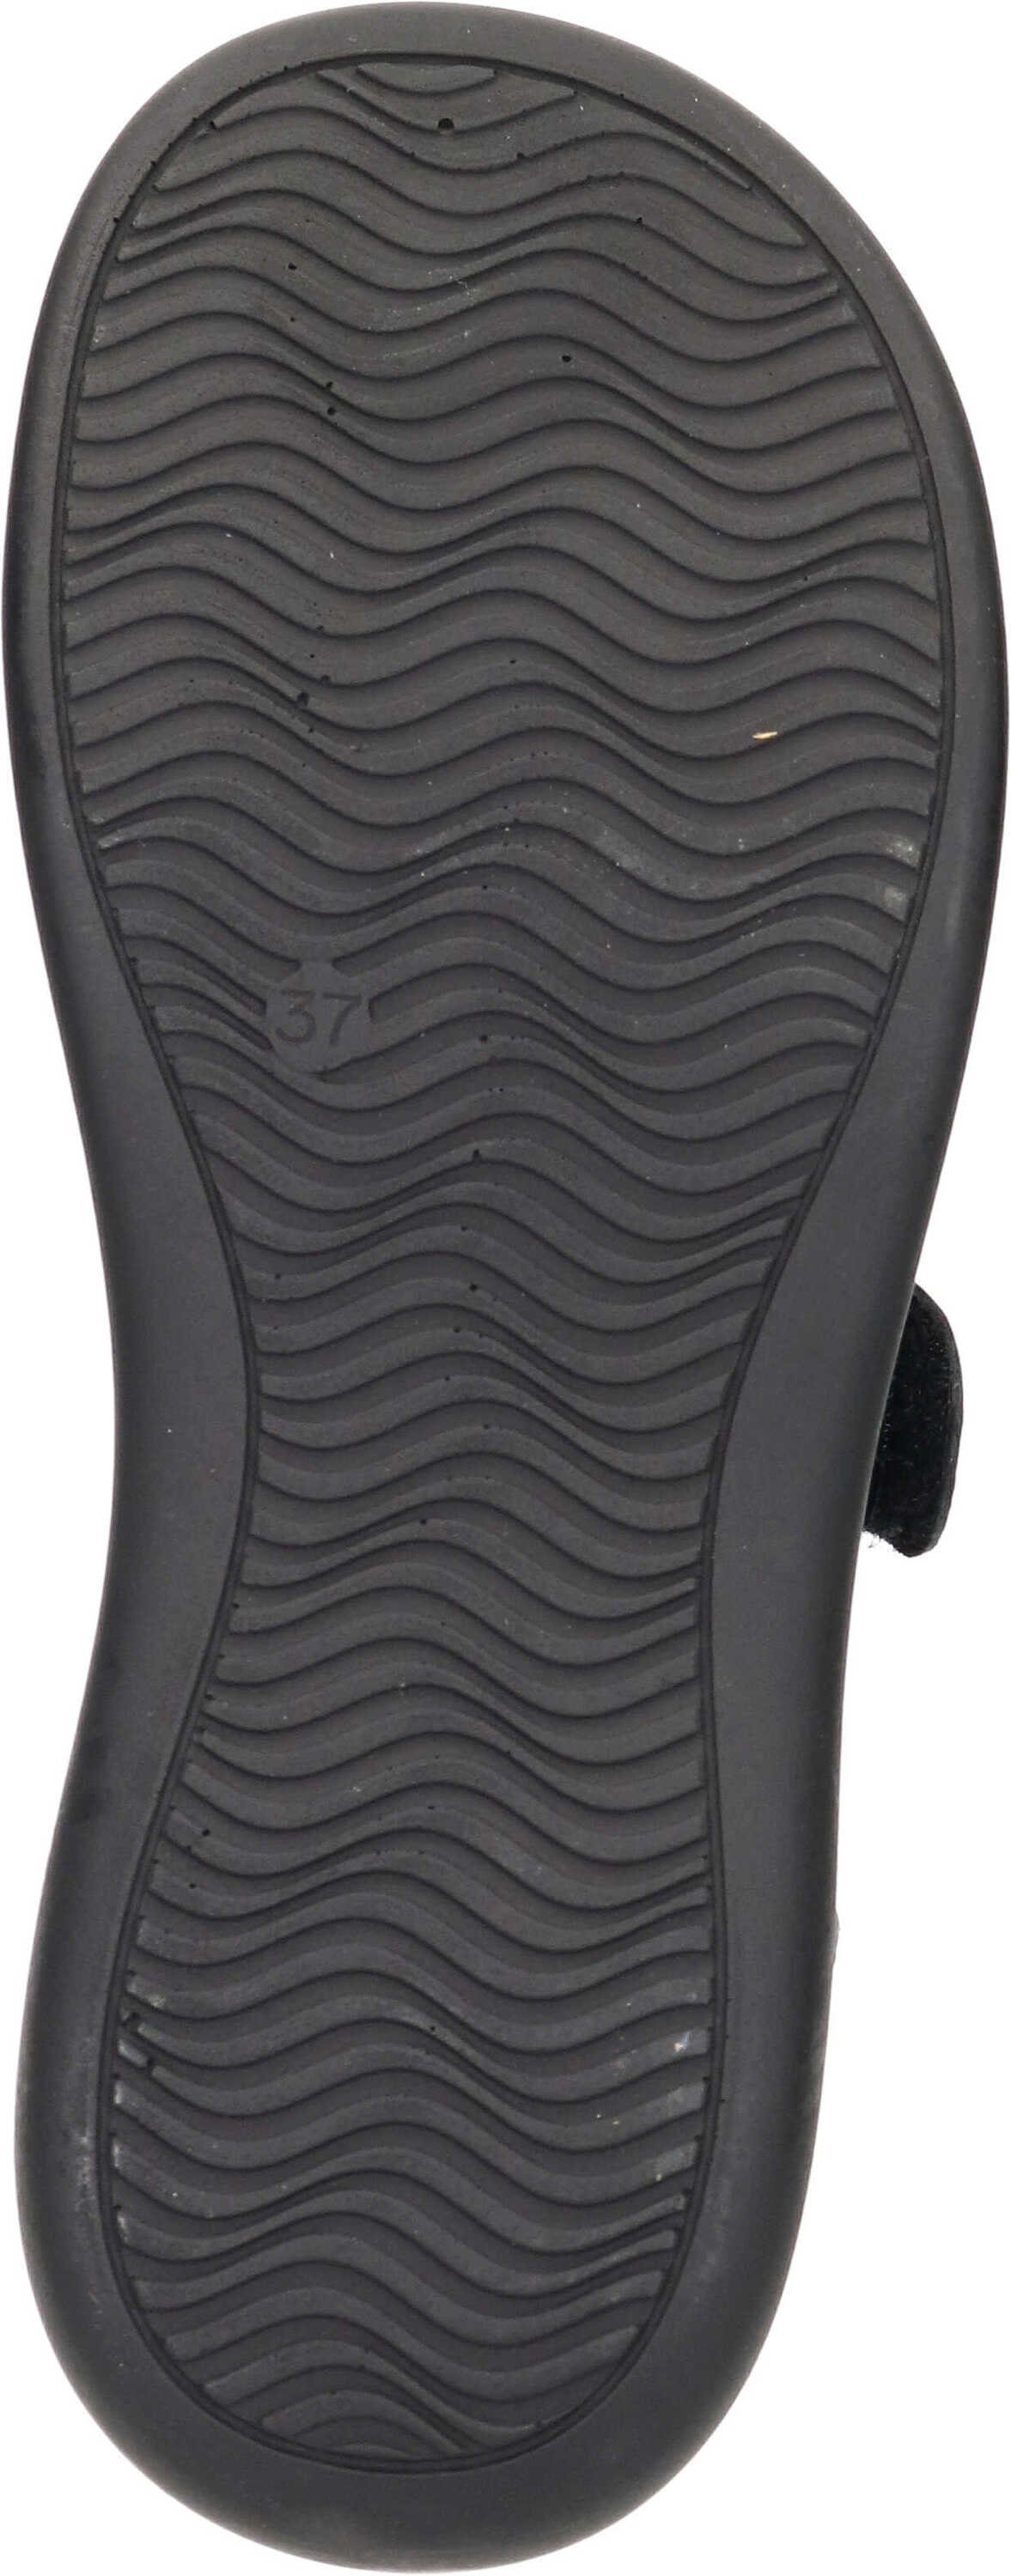 Comfortabel Klettschuhe Klettschuh aus echtem Leder schwarz